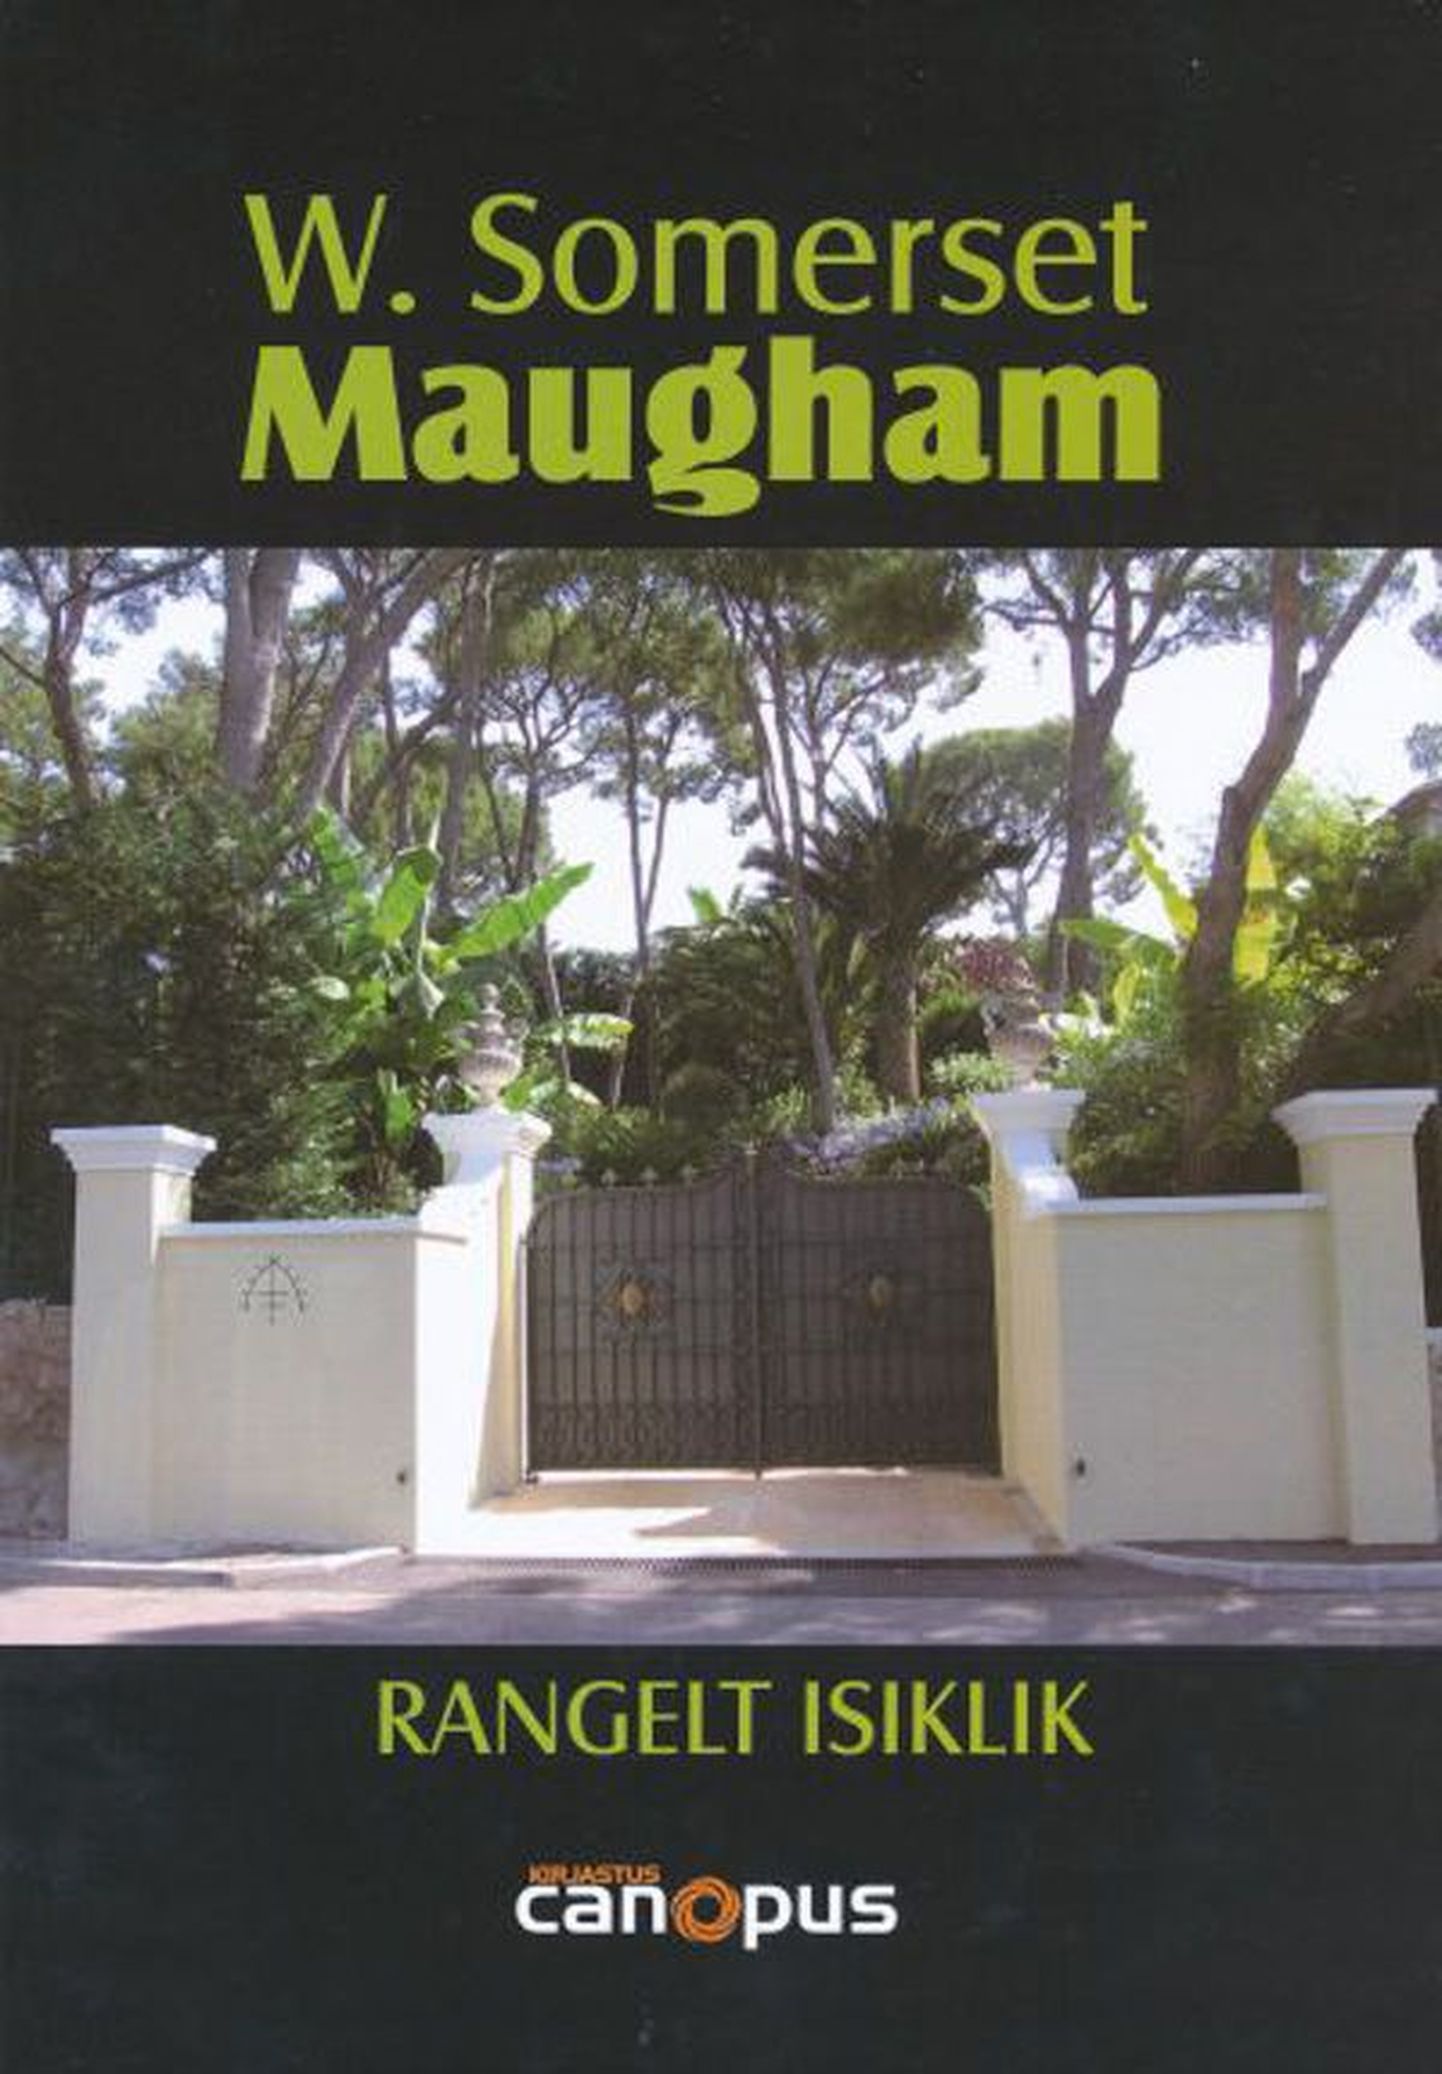 W. Somerset Maugham 
«Rangelt isiklik»
Canopus 2010, 214 lk